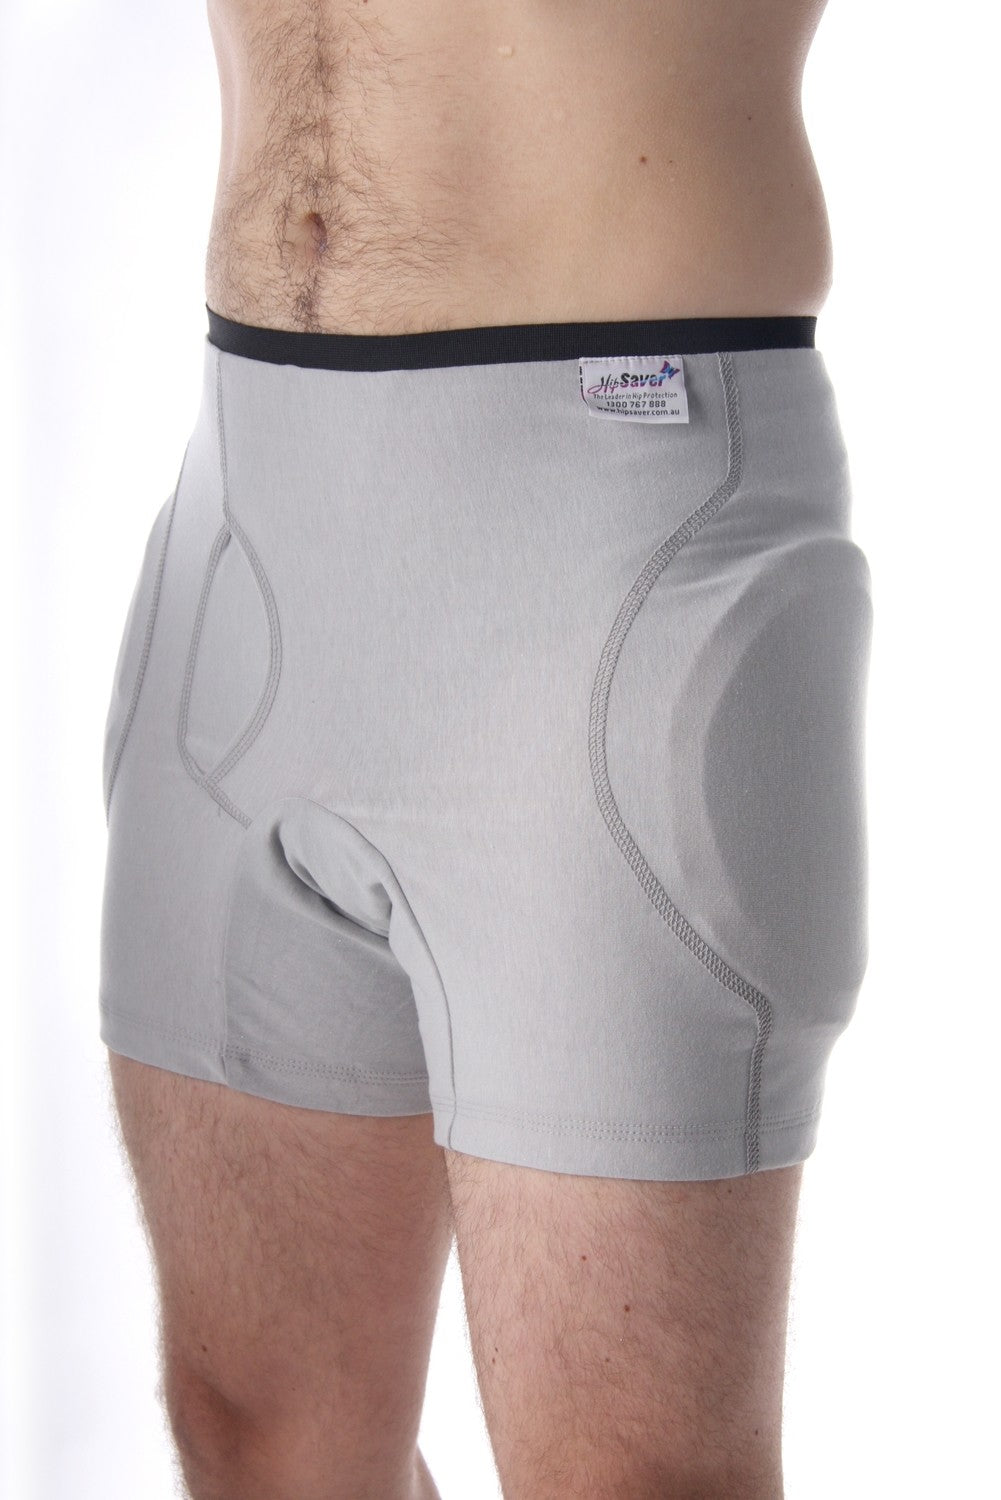 HipSaver SlimFit Falls Provention Starter Kit Male Medium - Hips 93-102cm